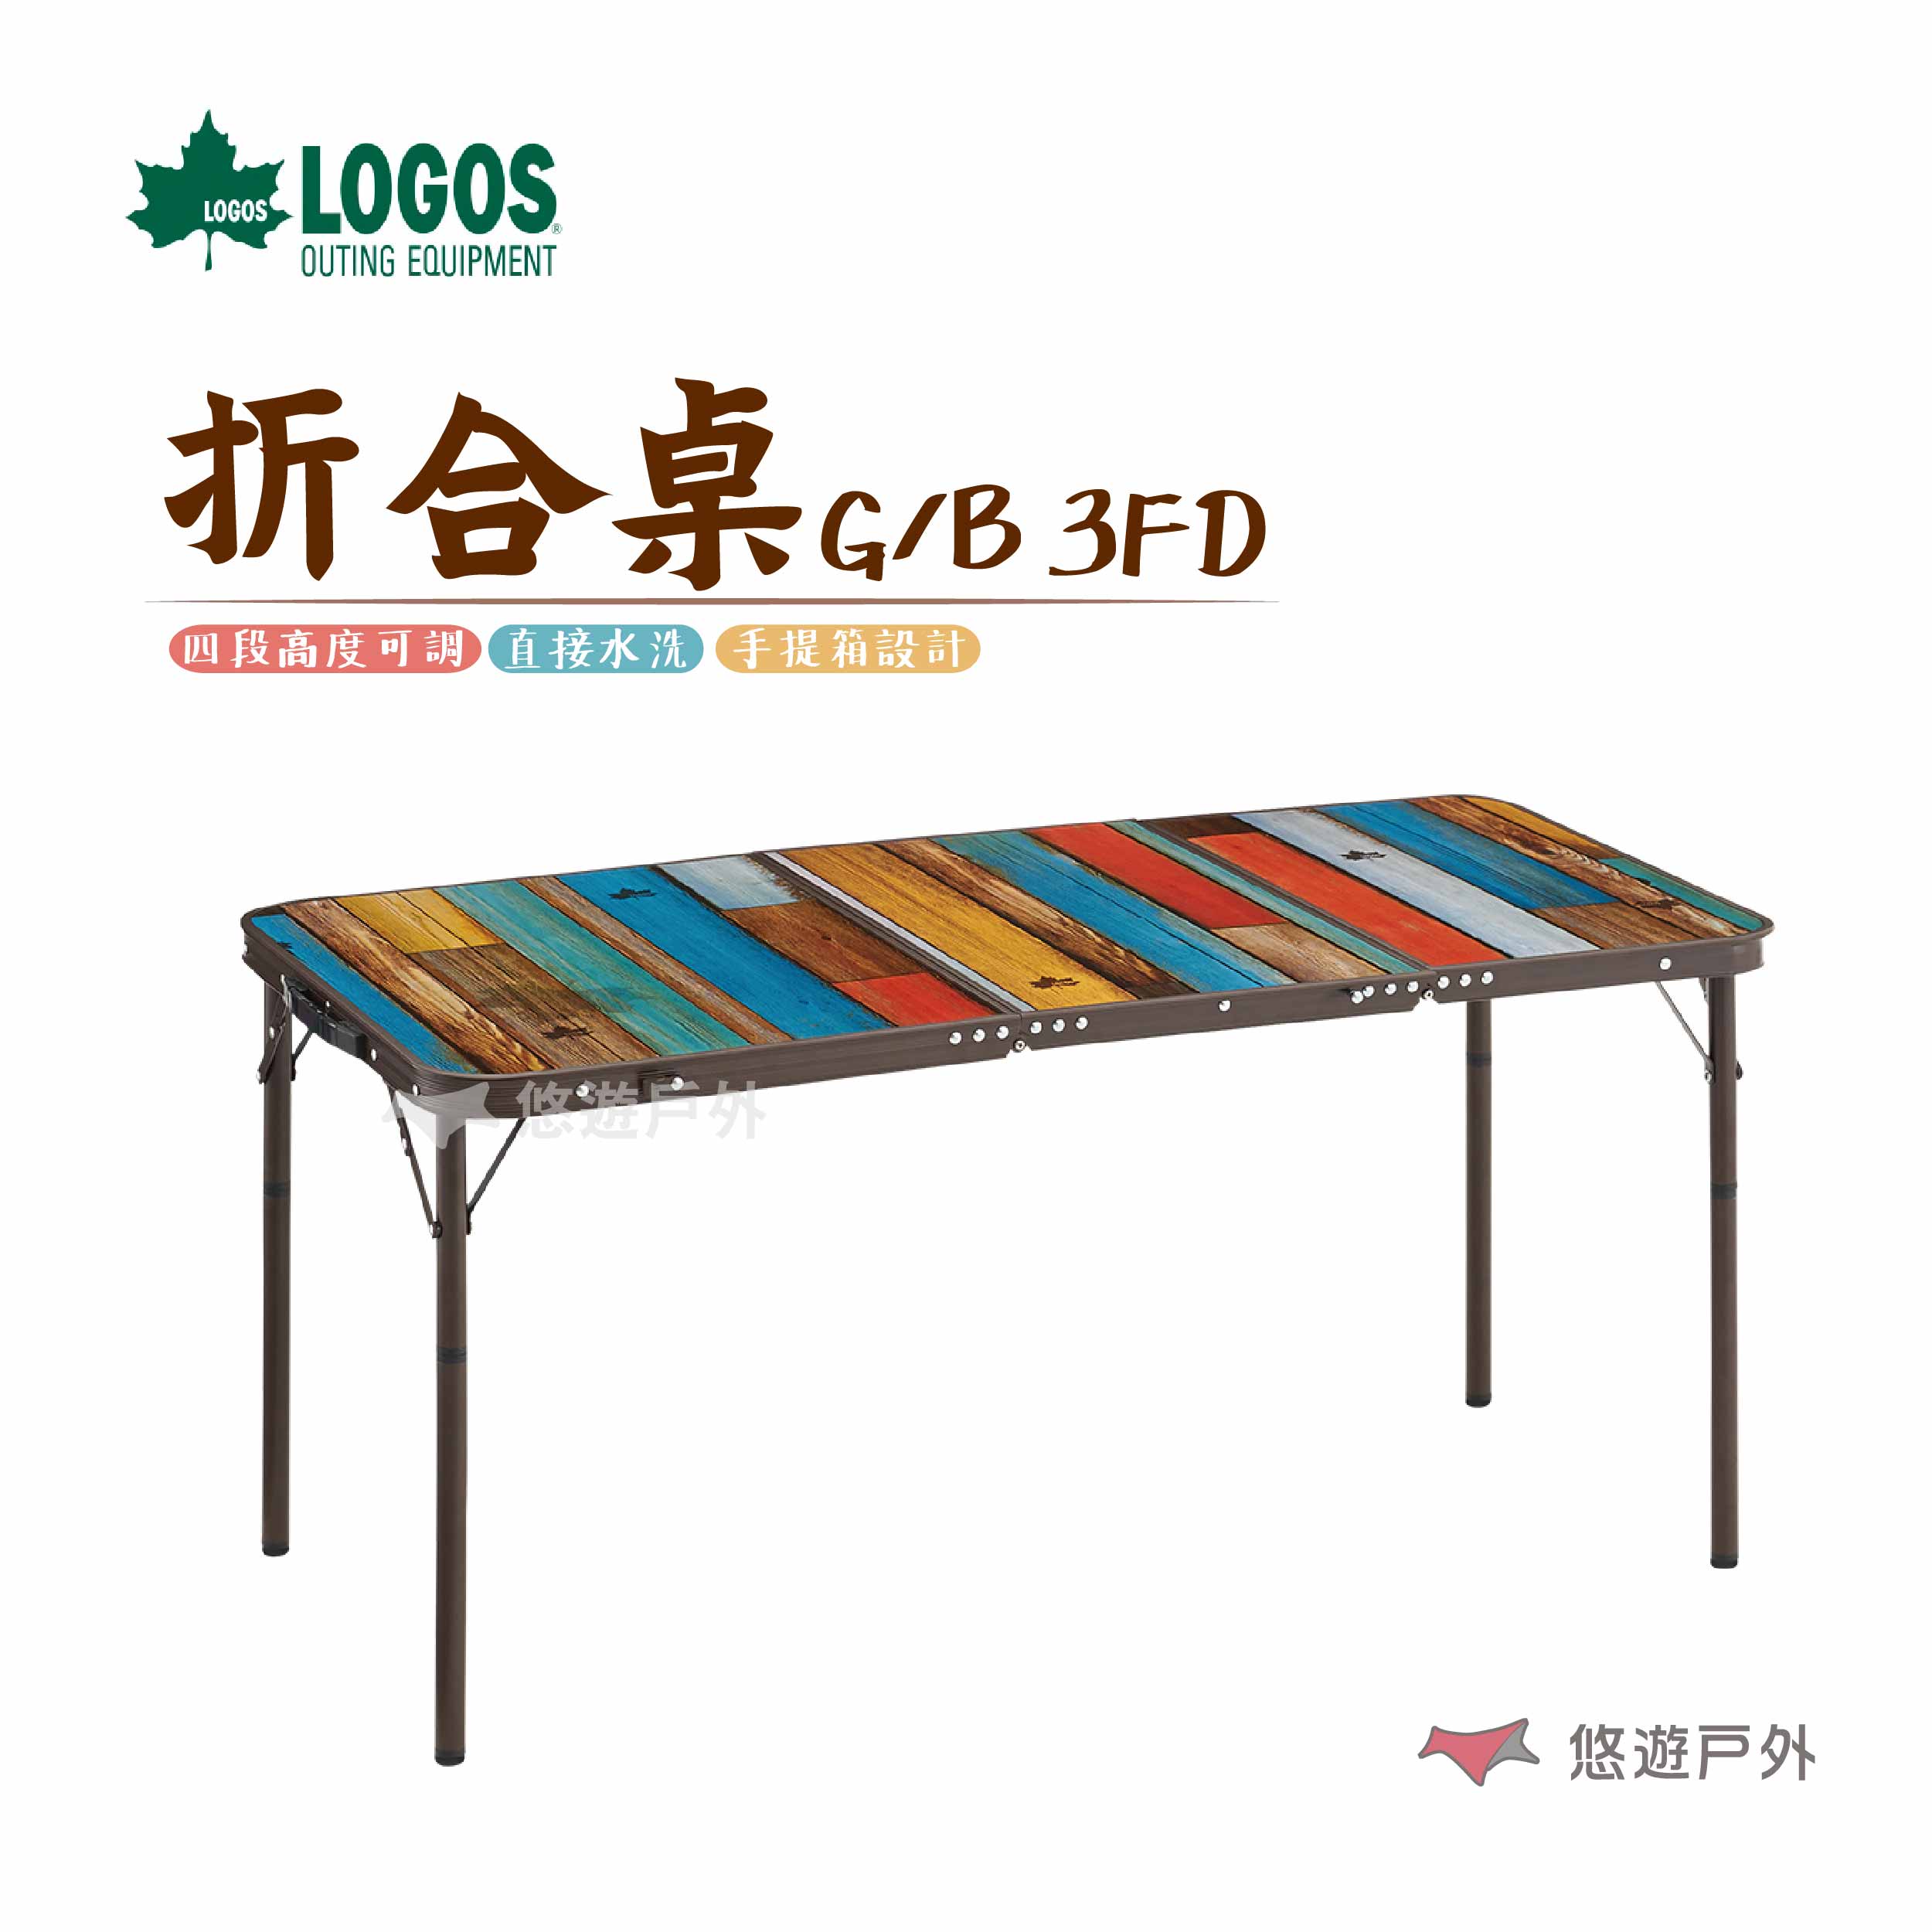 LOGOS-G/B 3FD折合桌(仿舊系列) #73200021 戶外桌 桌子 【悠遊戶外】